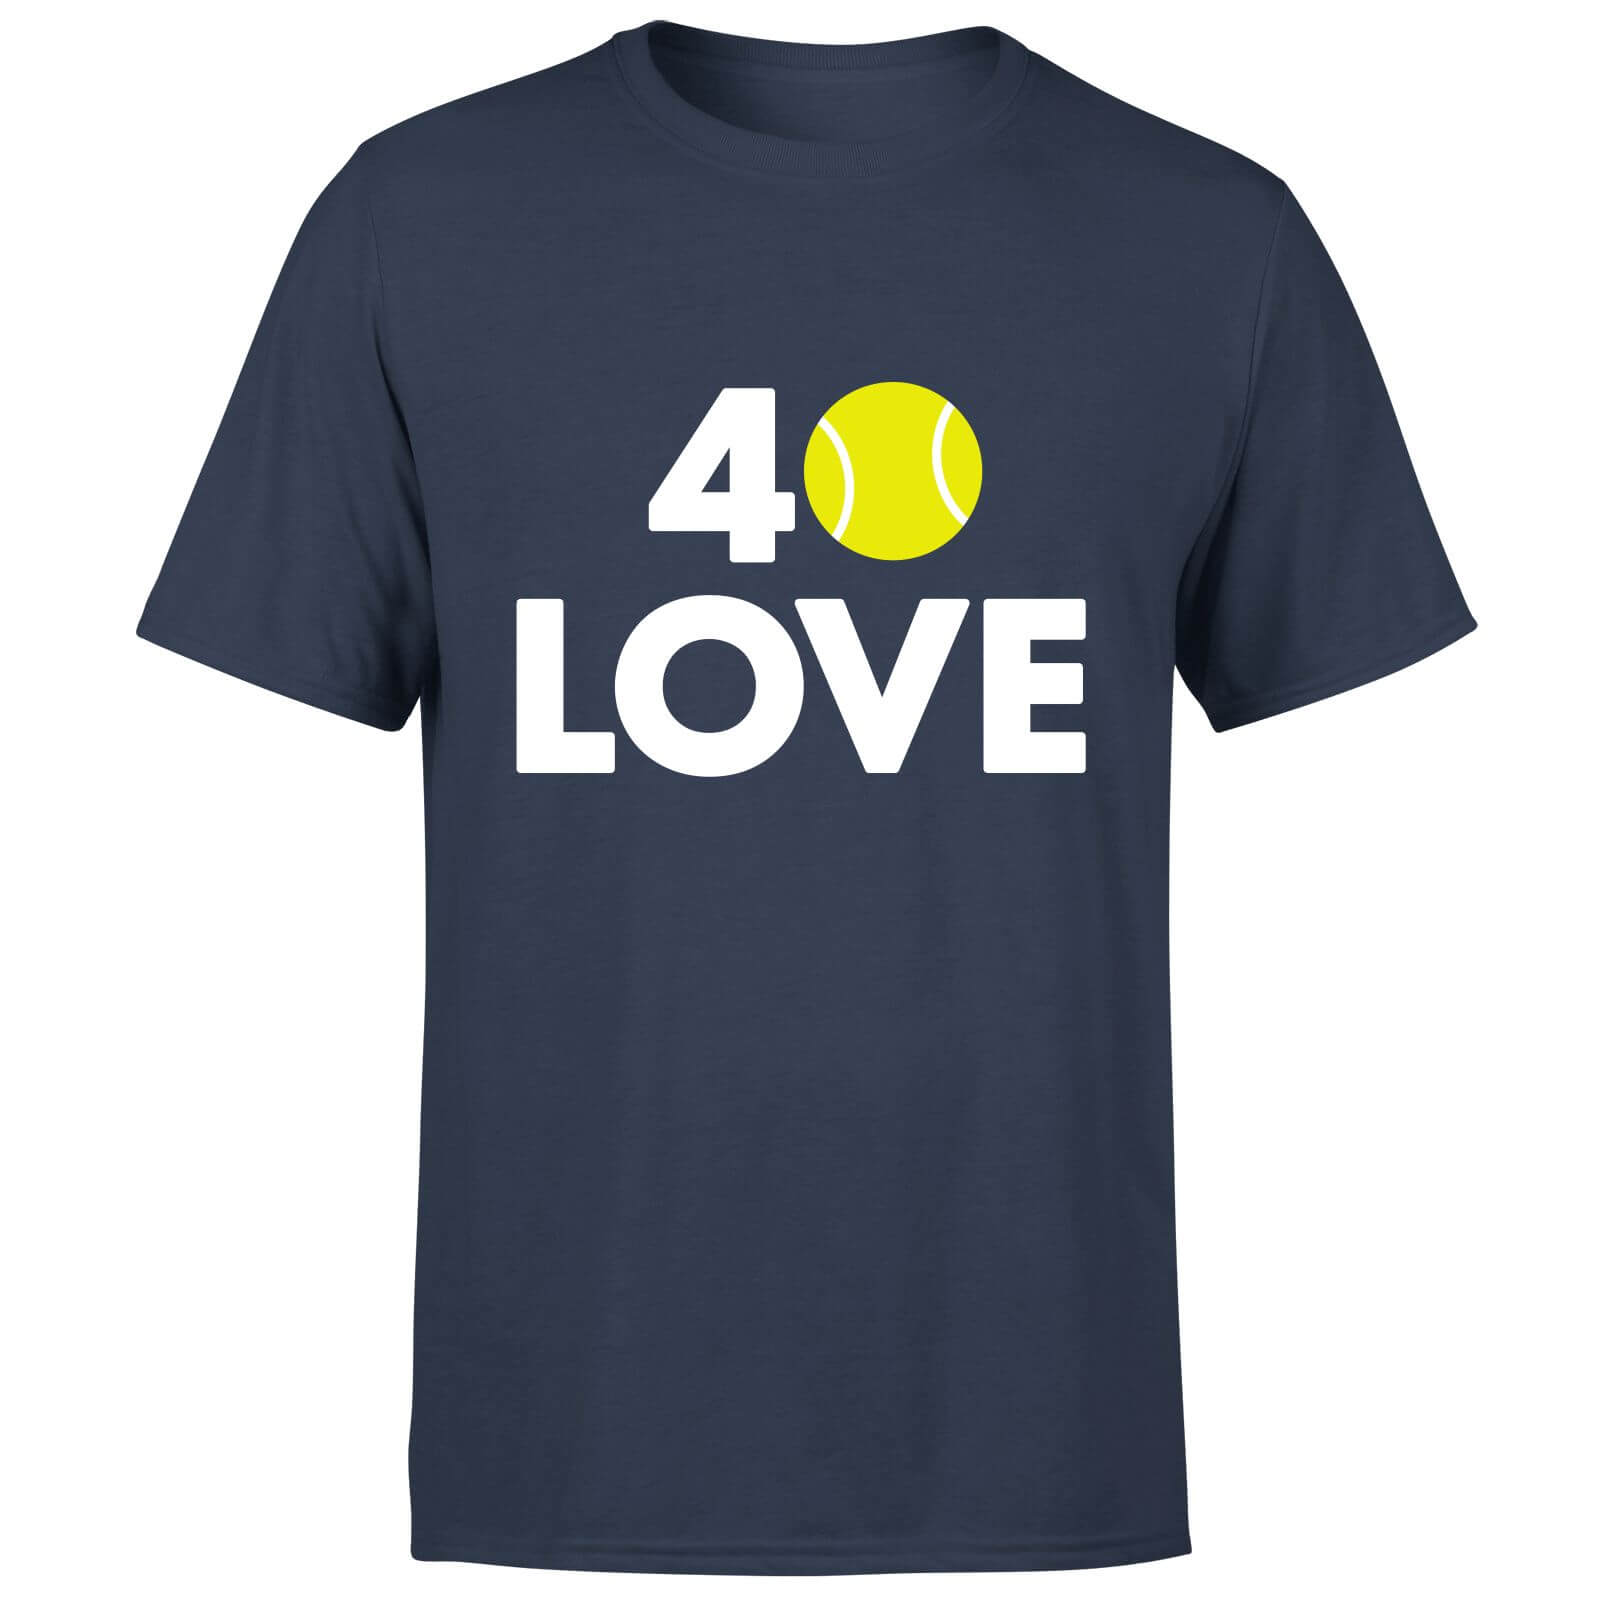 40 Love T-Shirt - Navy - S - Navy